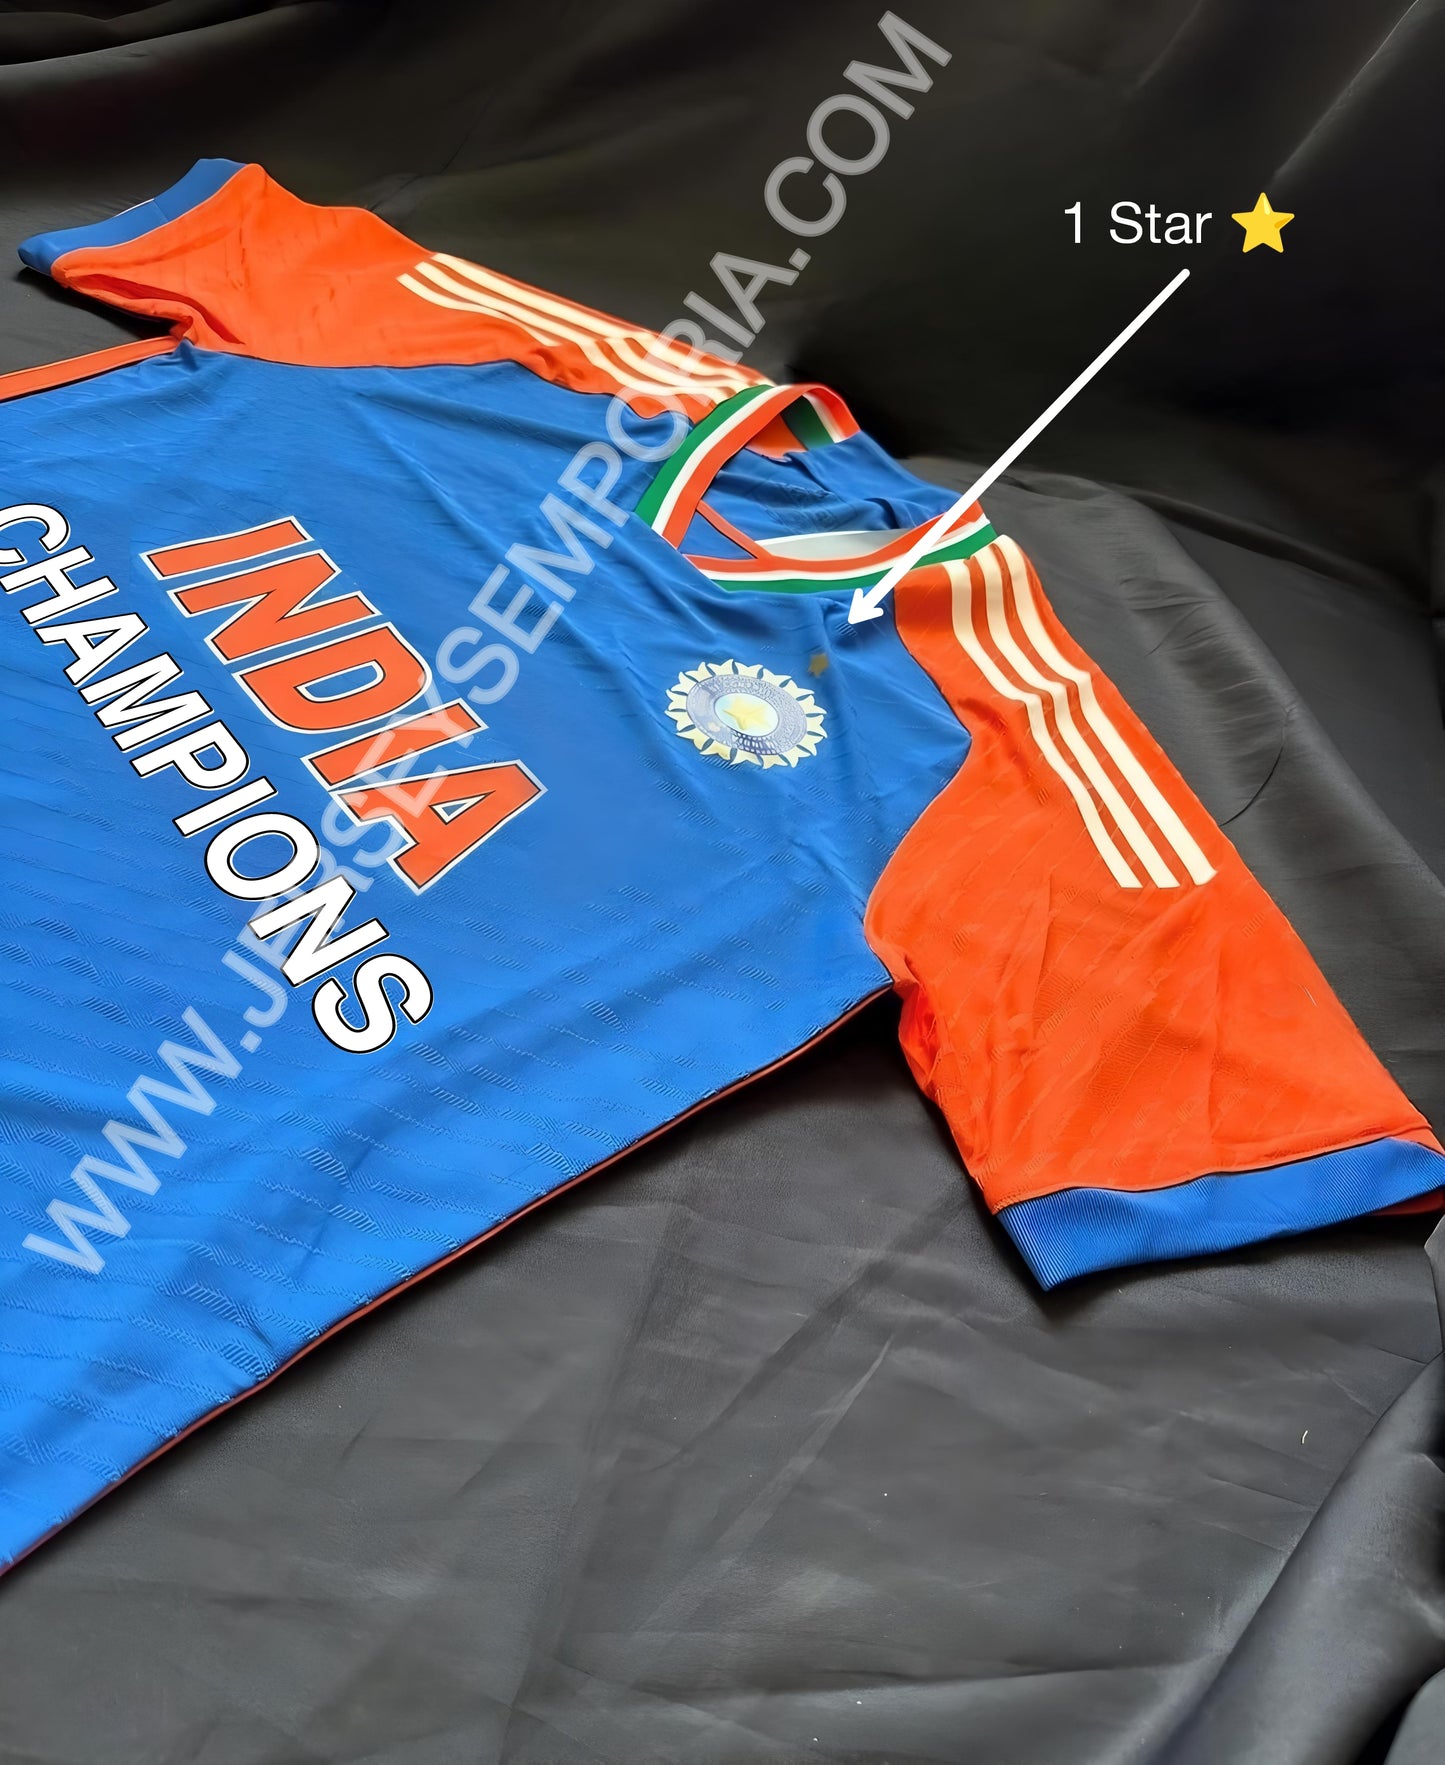 1 Star ⭐ Champions international  master copy  Jerseys